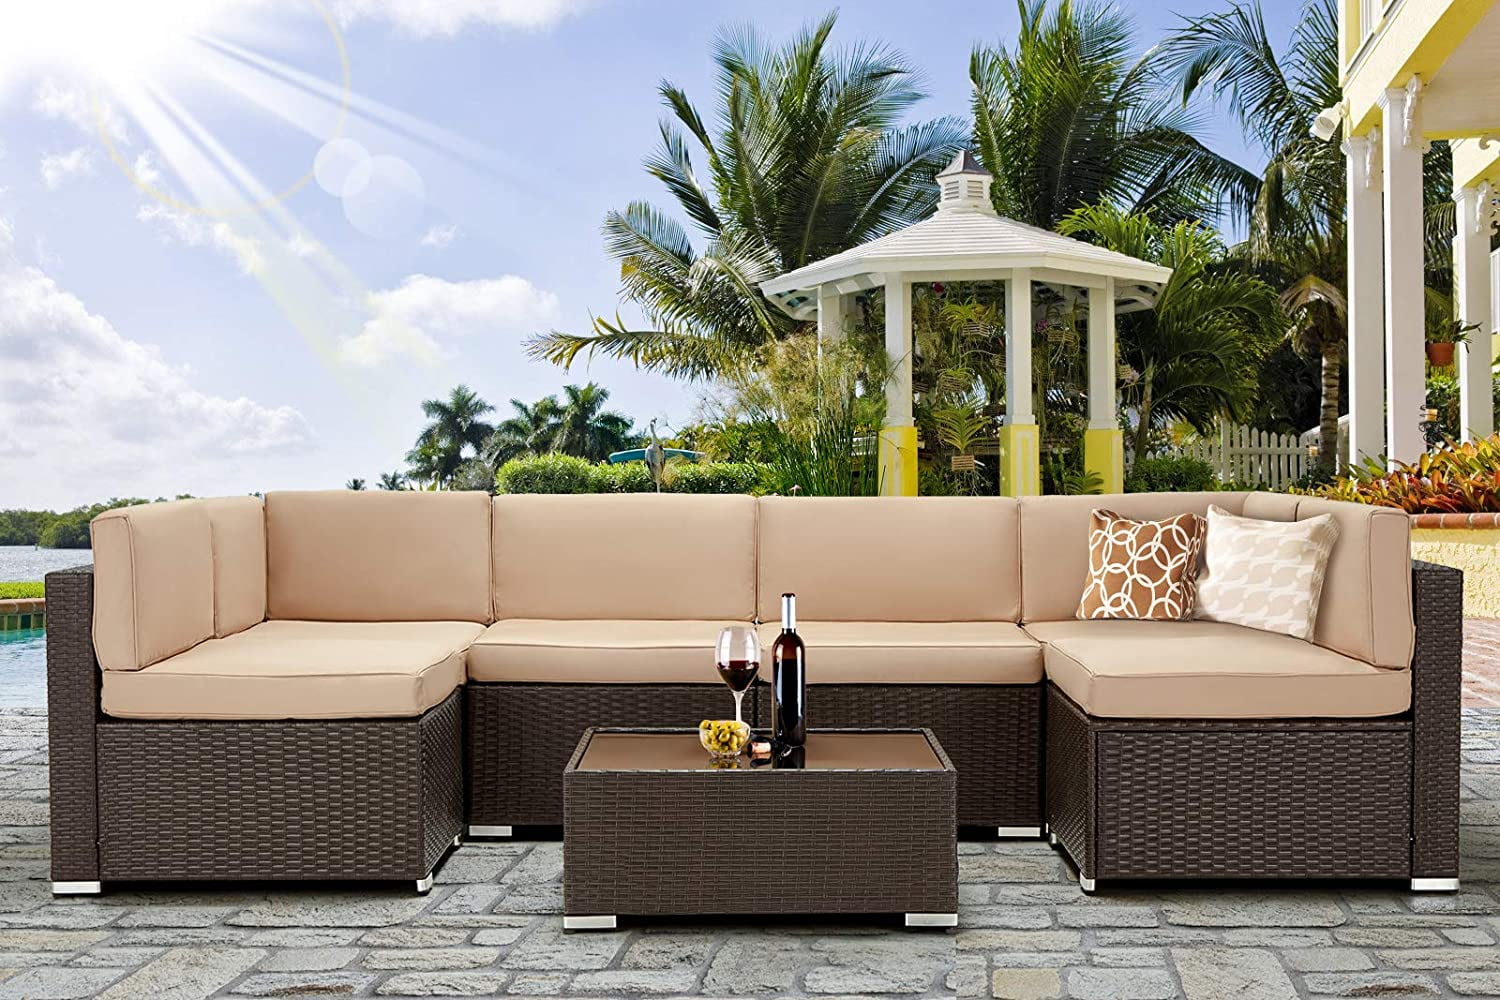 Danrelax 7-Piece Outdoor Sectional Sofa Patio Conversation Set, PE 